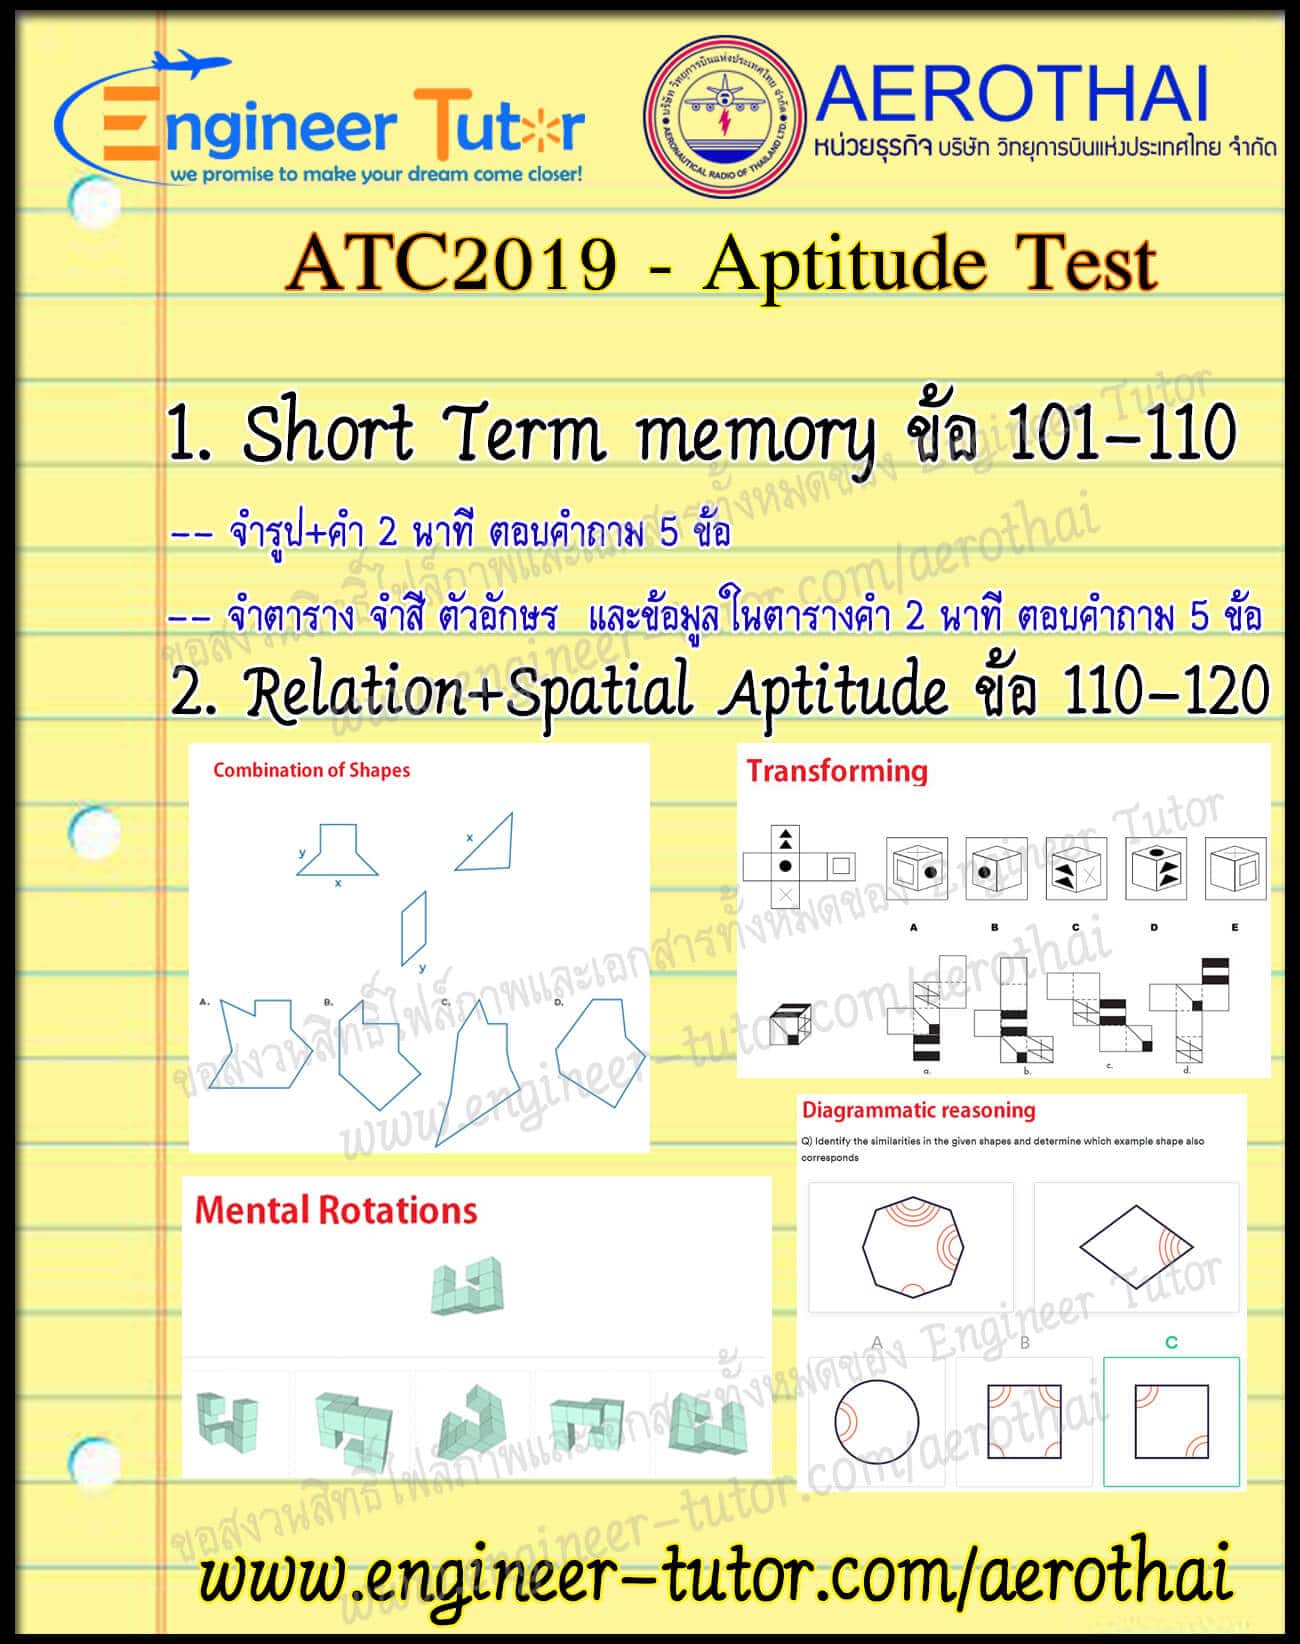 aptitude-test-air-traffic-control-atc-2019-engineer-tutor